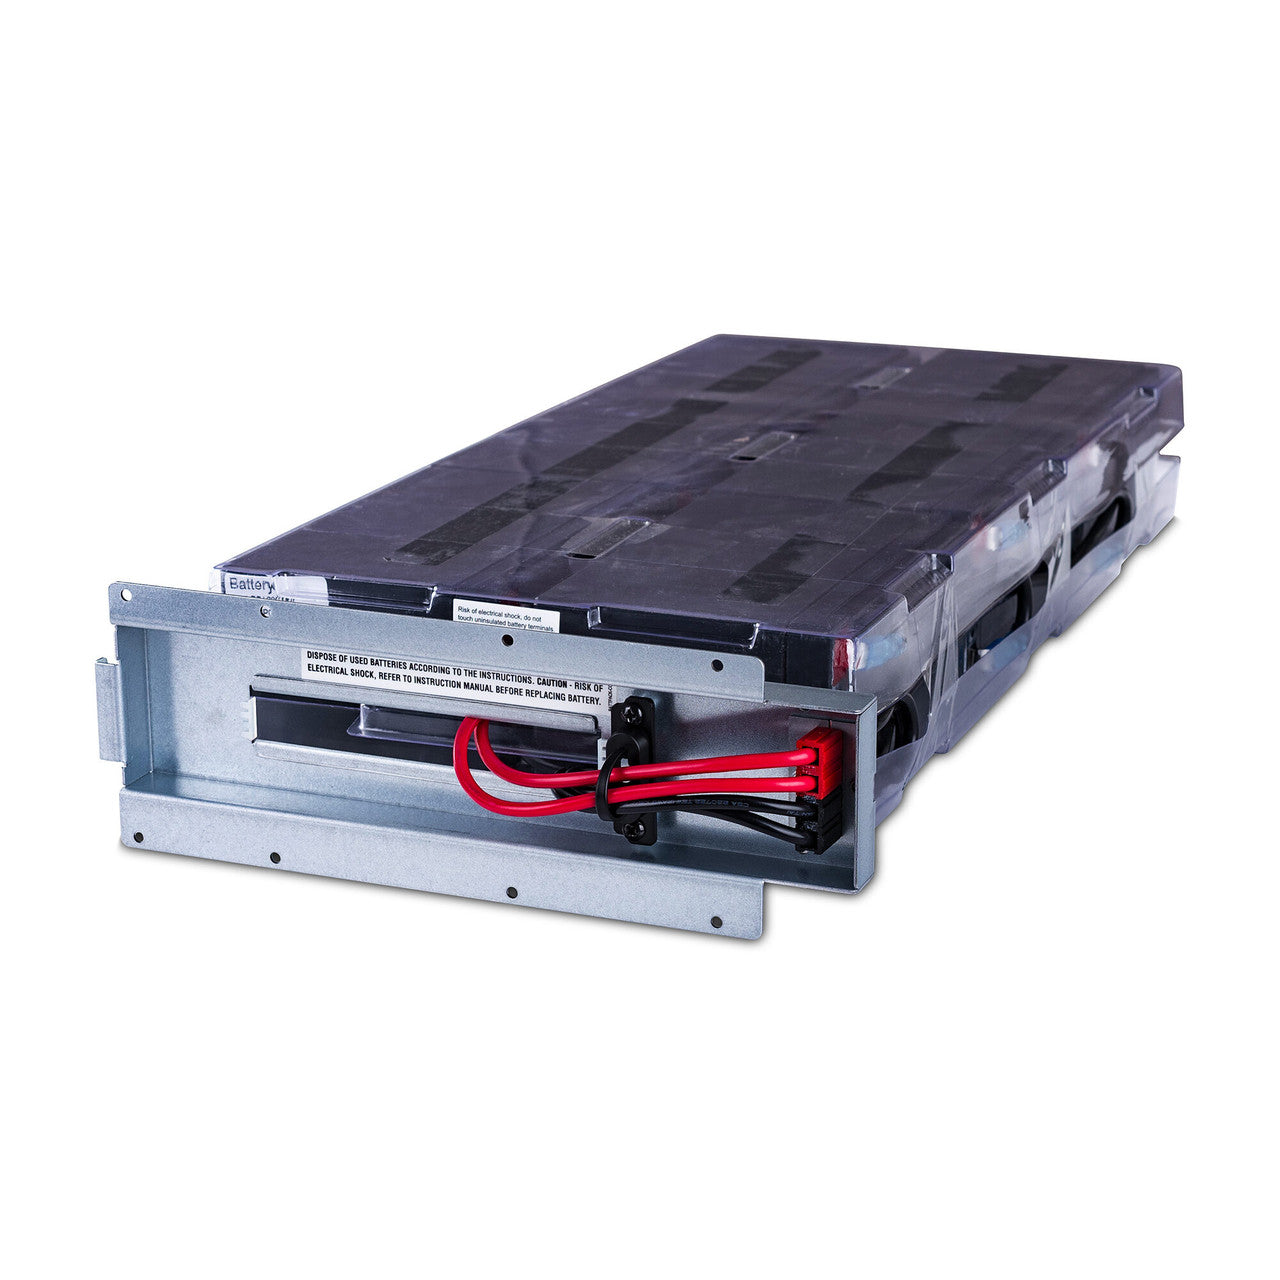 CyberPower RB1290X6A Replacement Battery Cartridge for OL2200RTXL2U, OL3000RTXL2U and OL3000RTXL2UHV. 18 Month Warranty